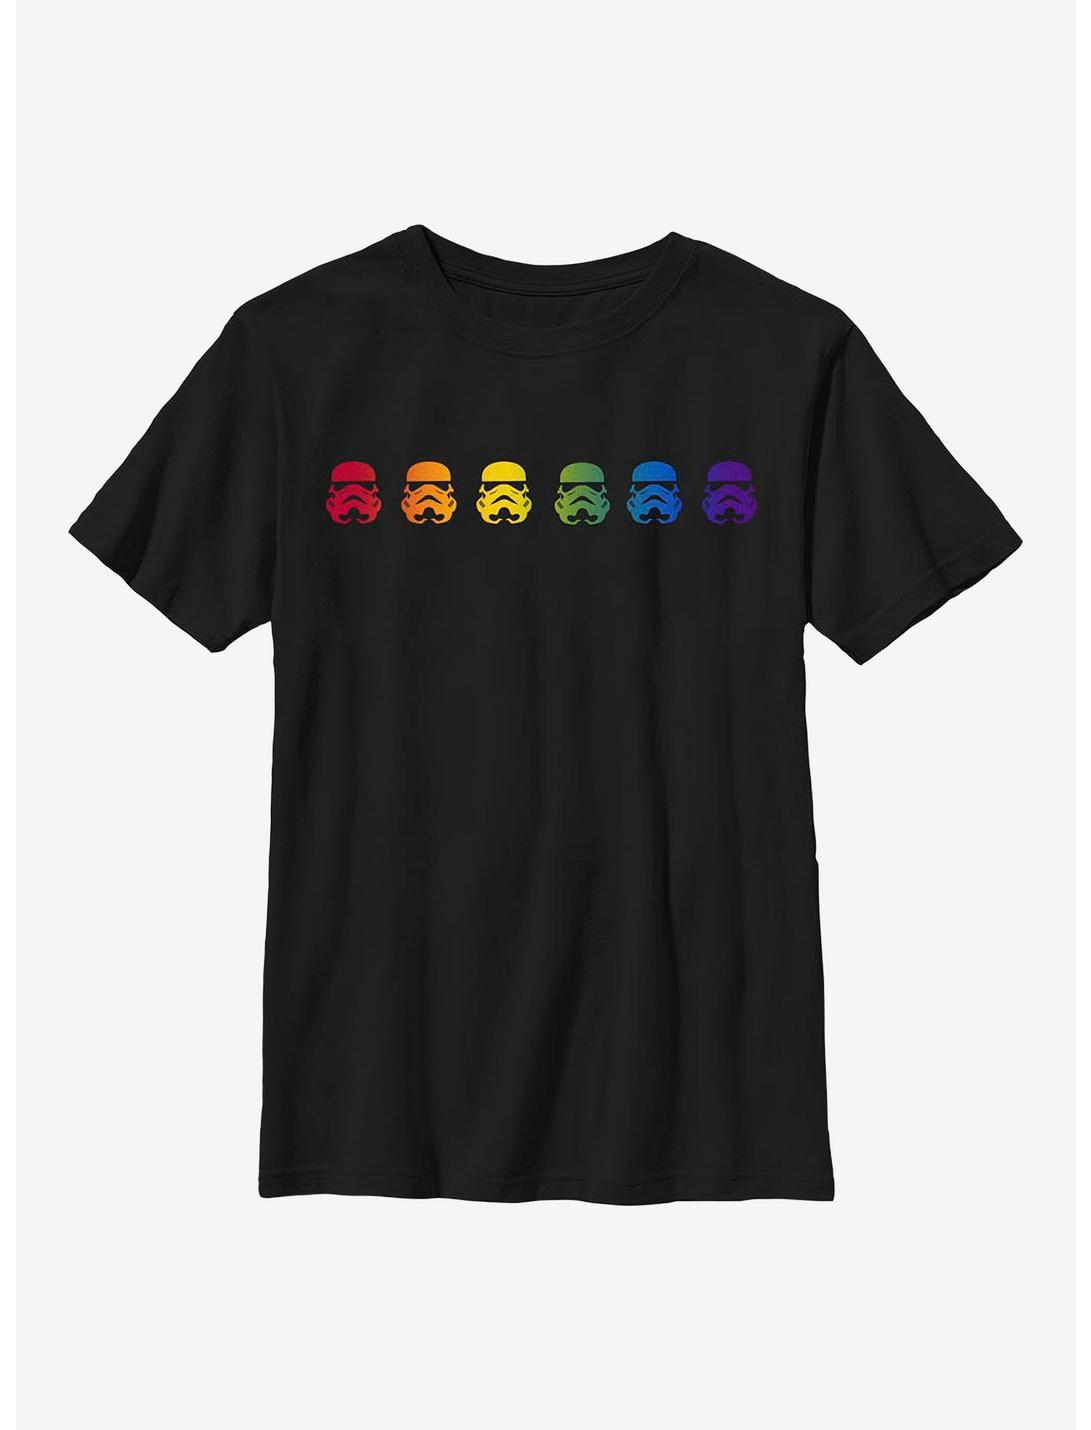 Star Wars Pride Helmets Youth T-Shirt, BLACK, hi-res